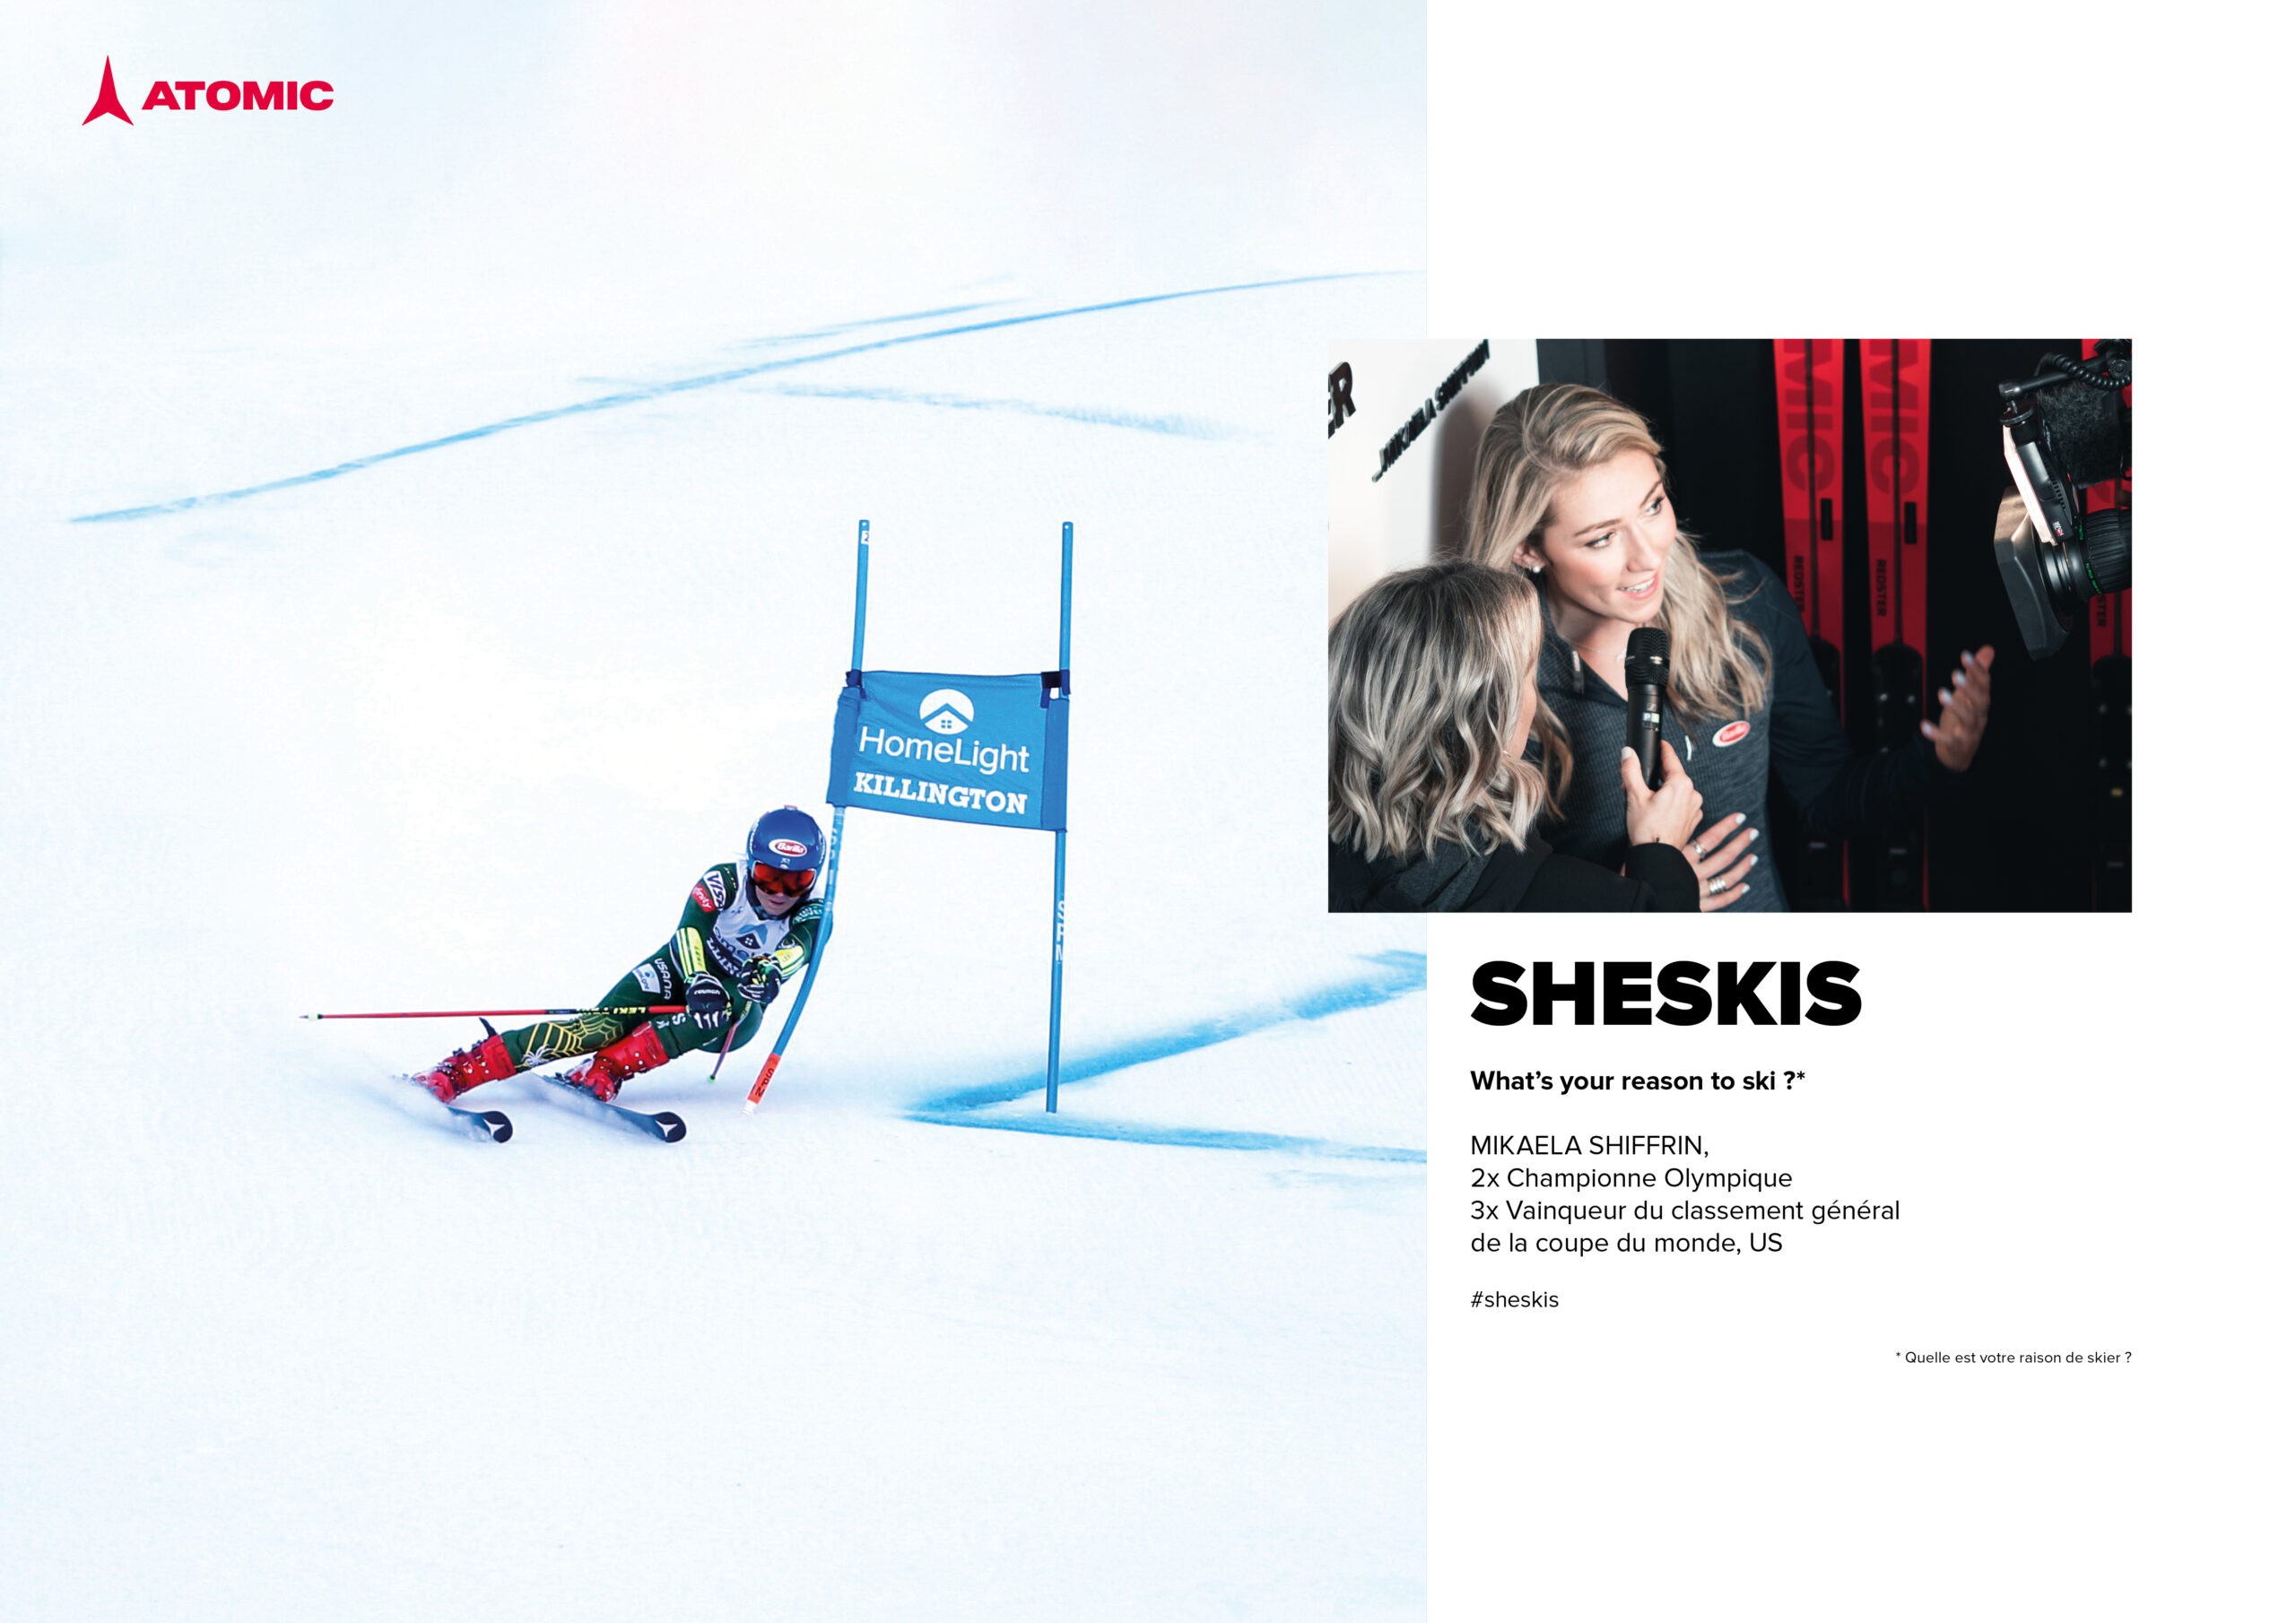 Un ski femme Atomic pour chaque skieuse ! #Sheskis 